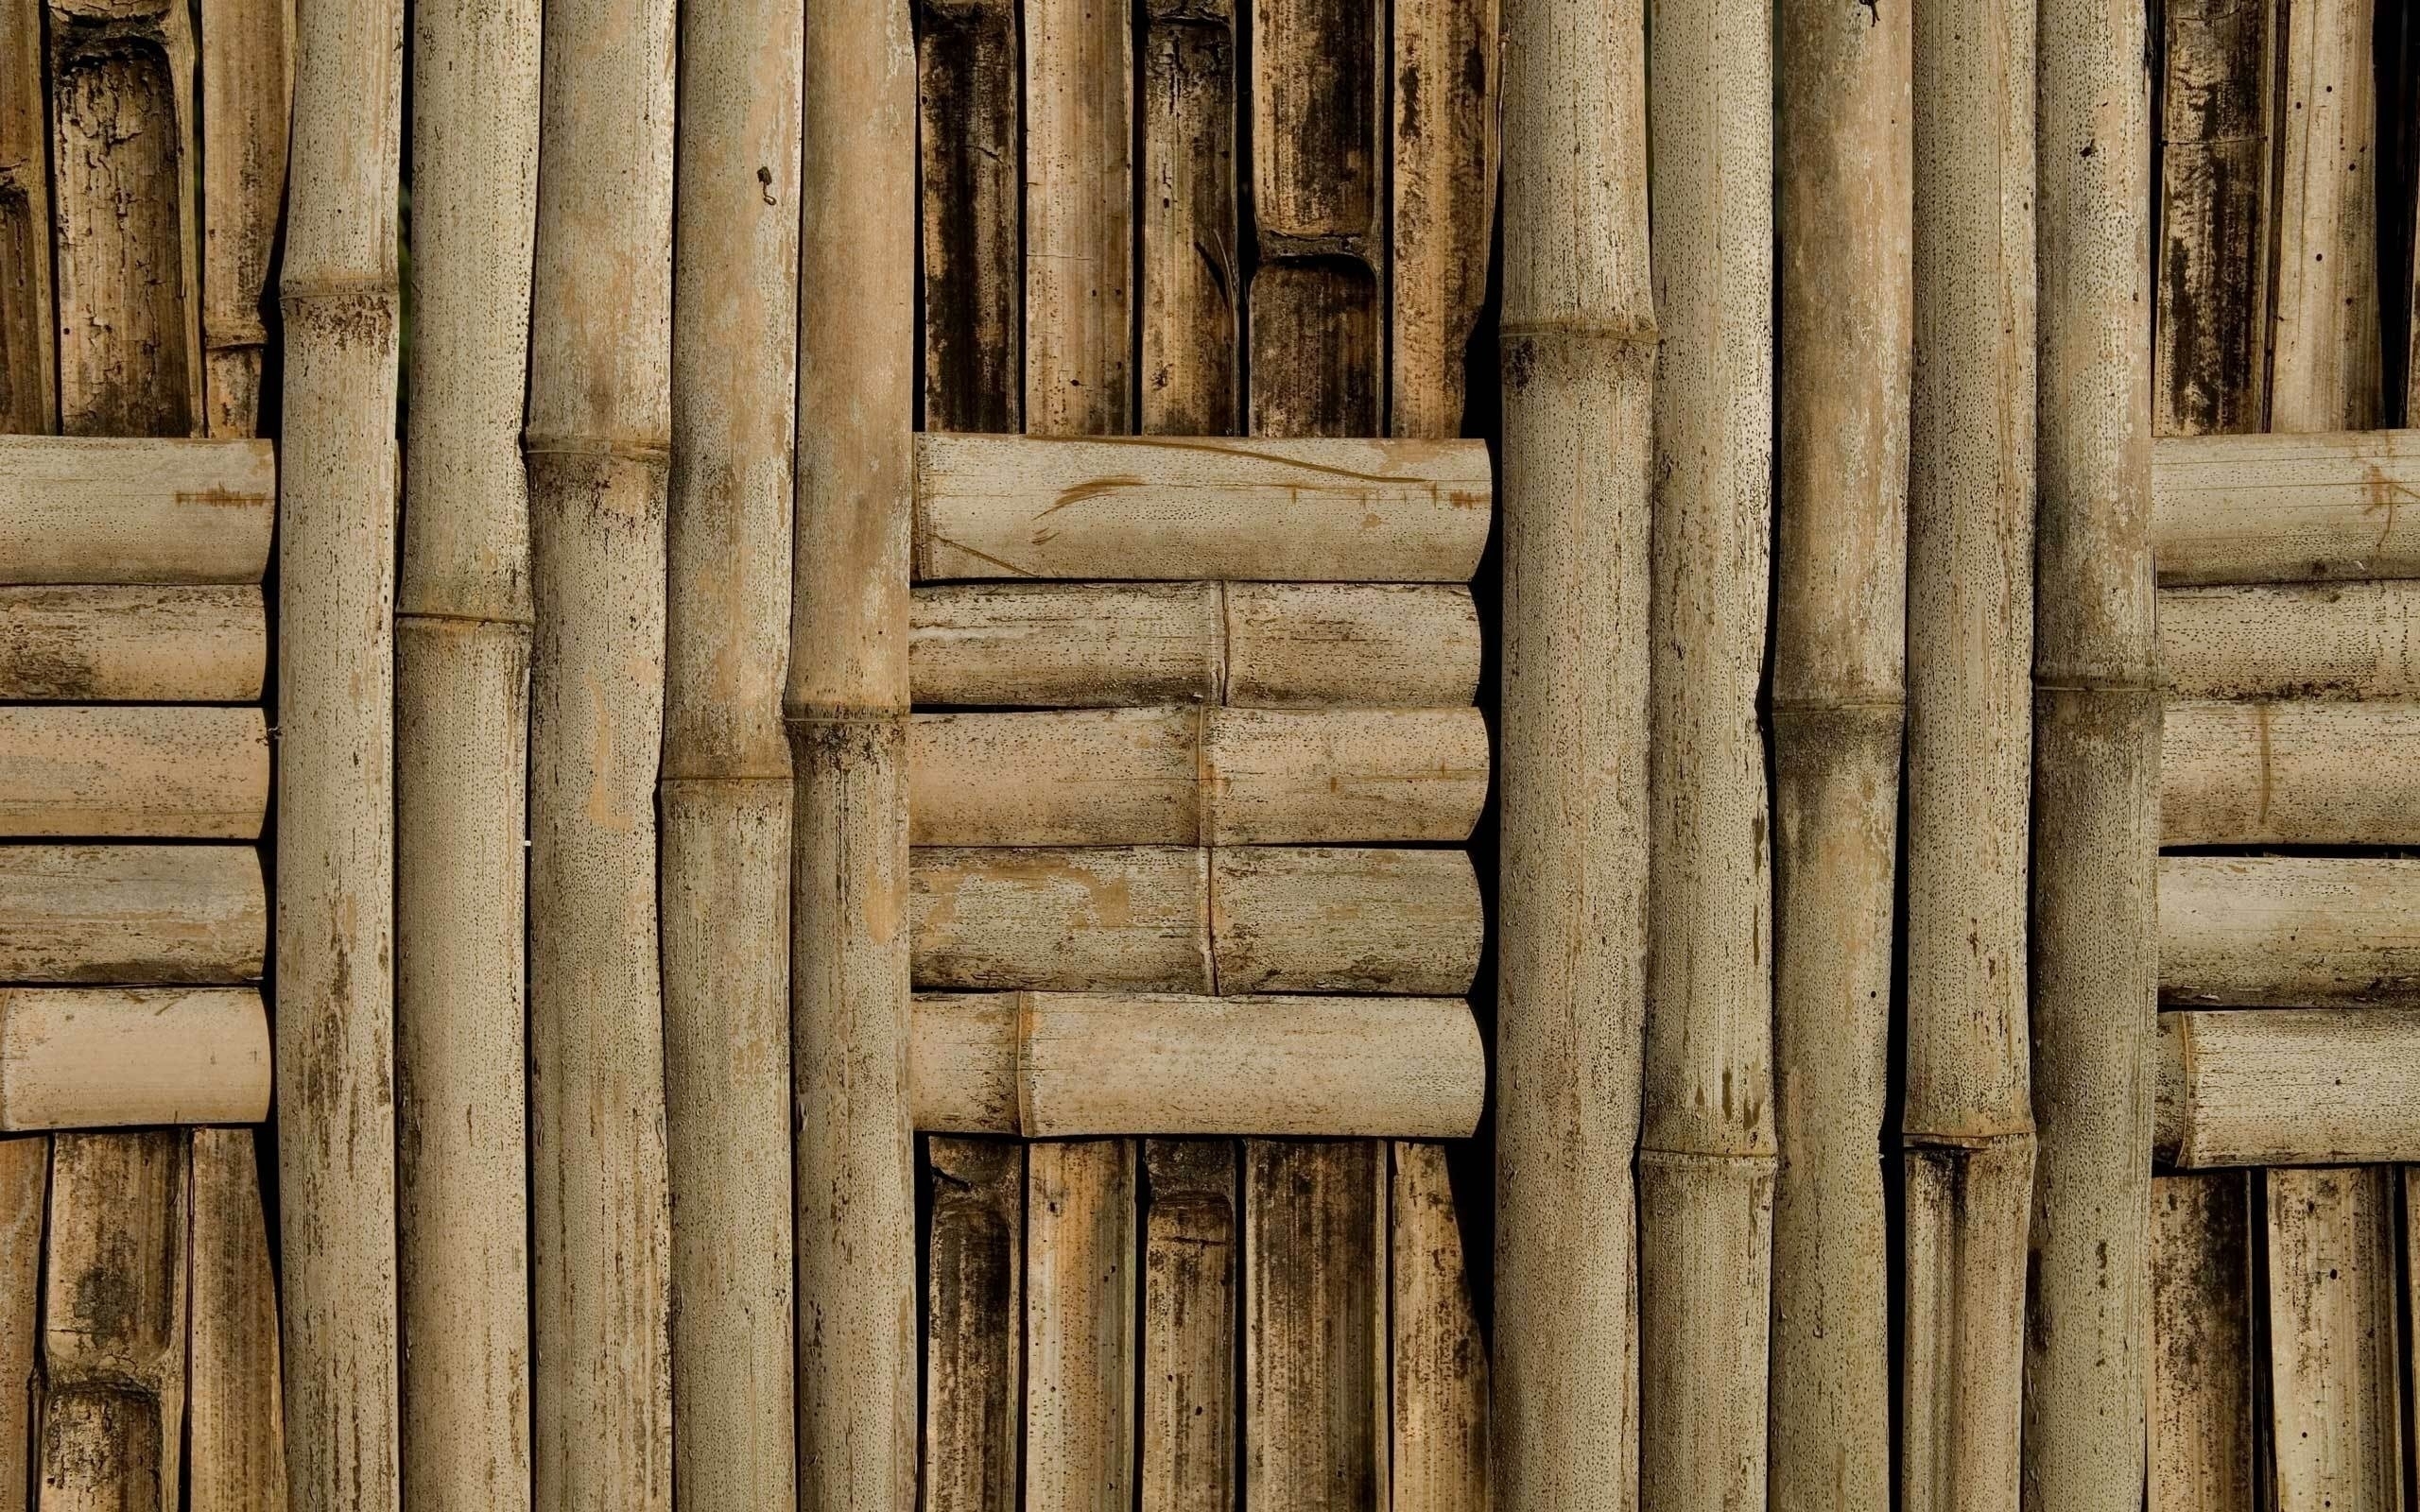 Bamboo Backgrounds Free Download | PixelsTalk.Net